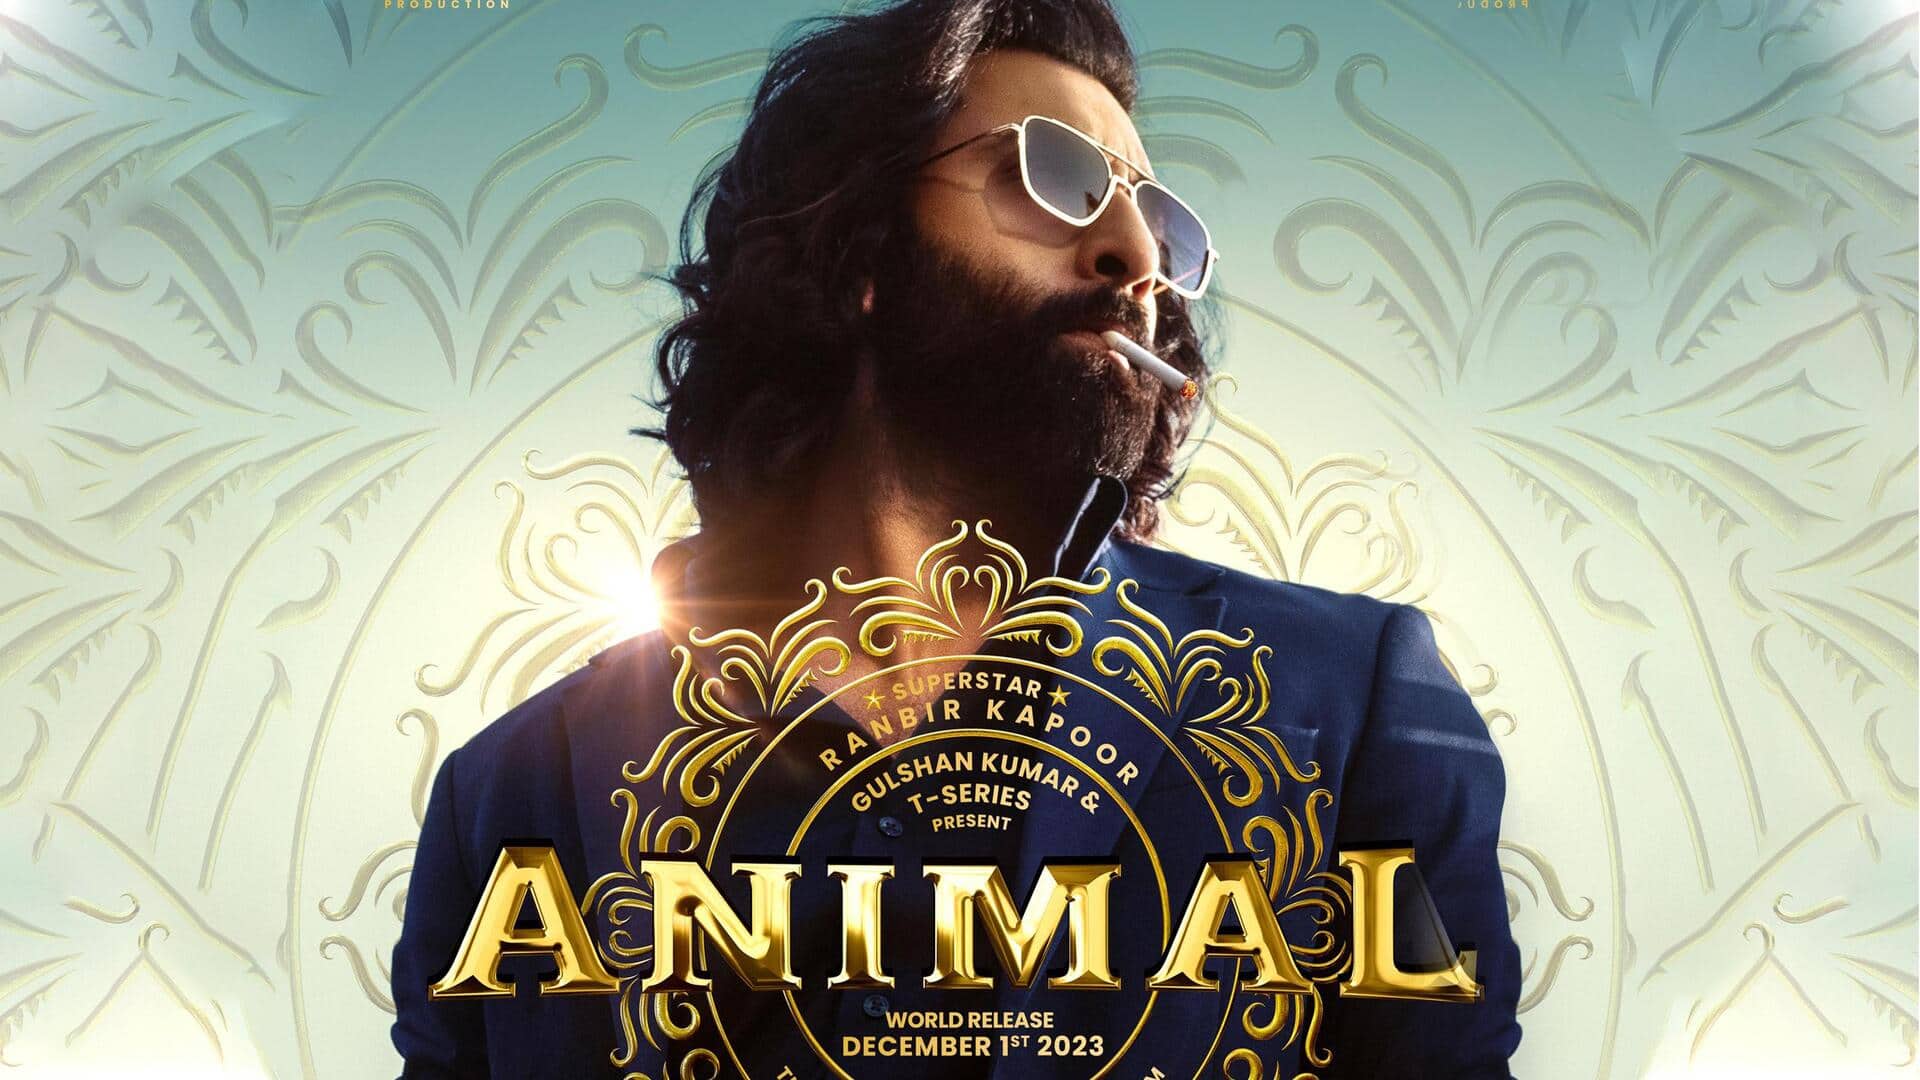 'Animal' vs 'Sam Bahadur': Advance bookings favor Ranbir Kapoor's film